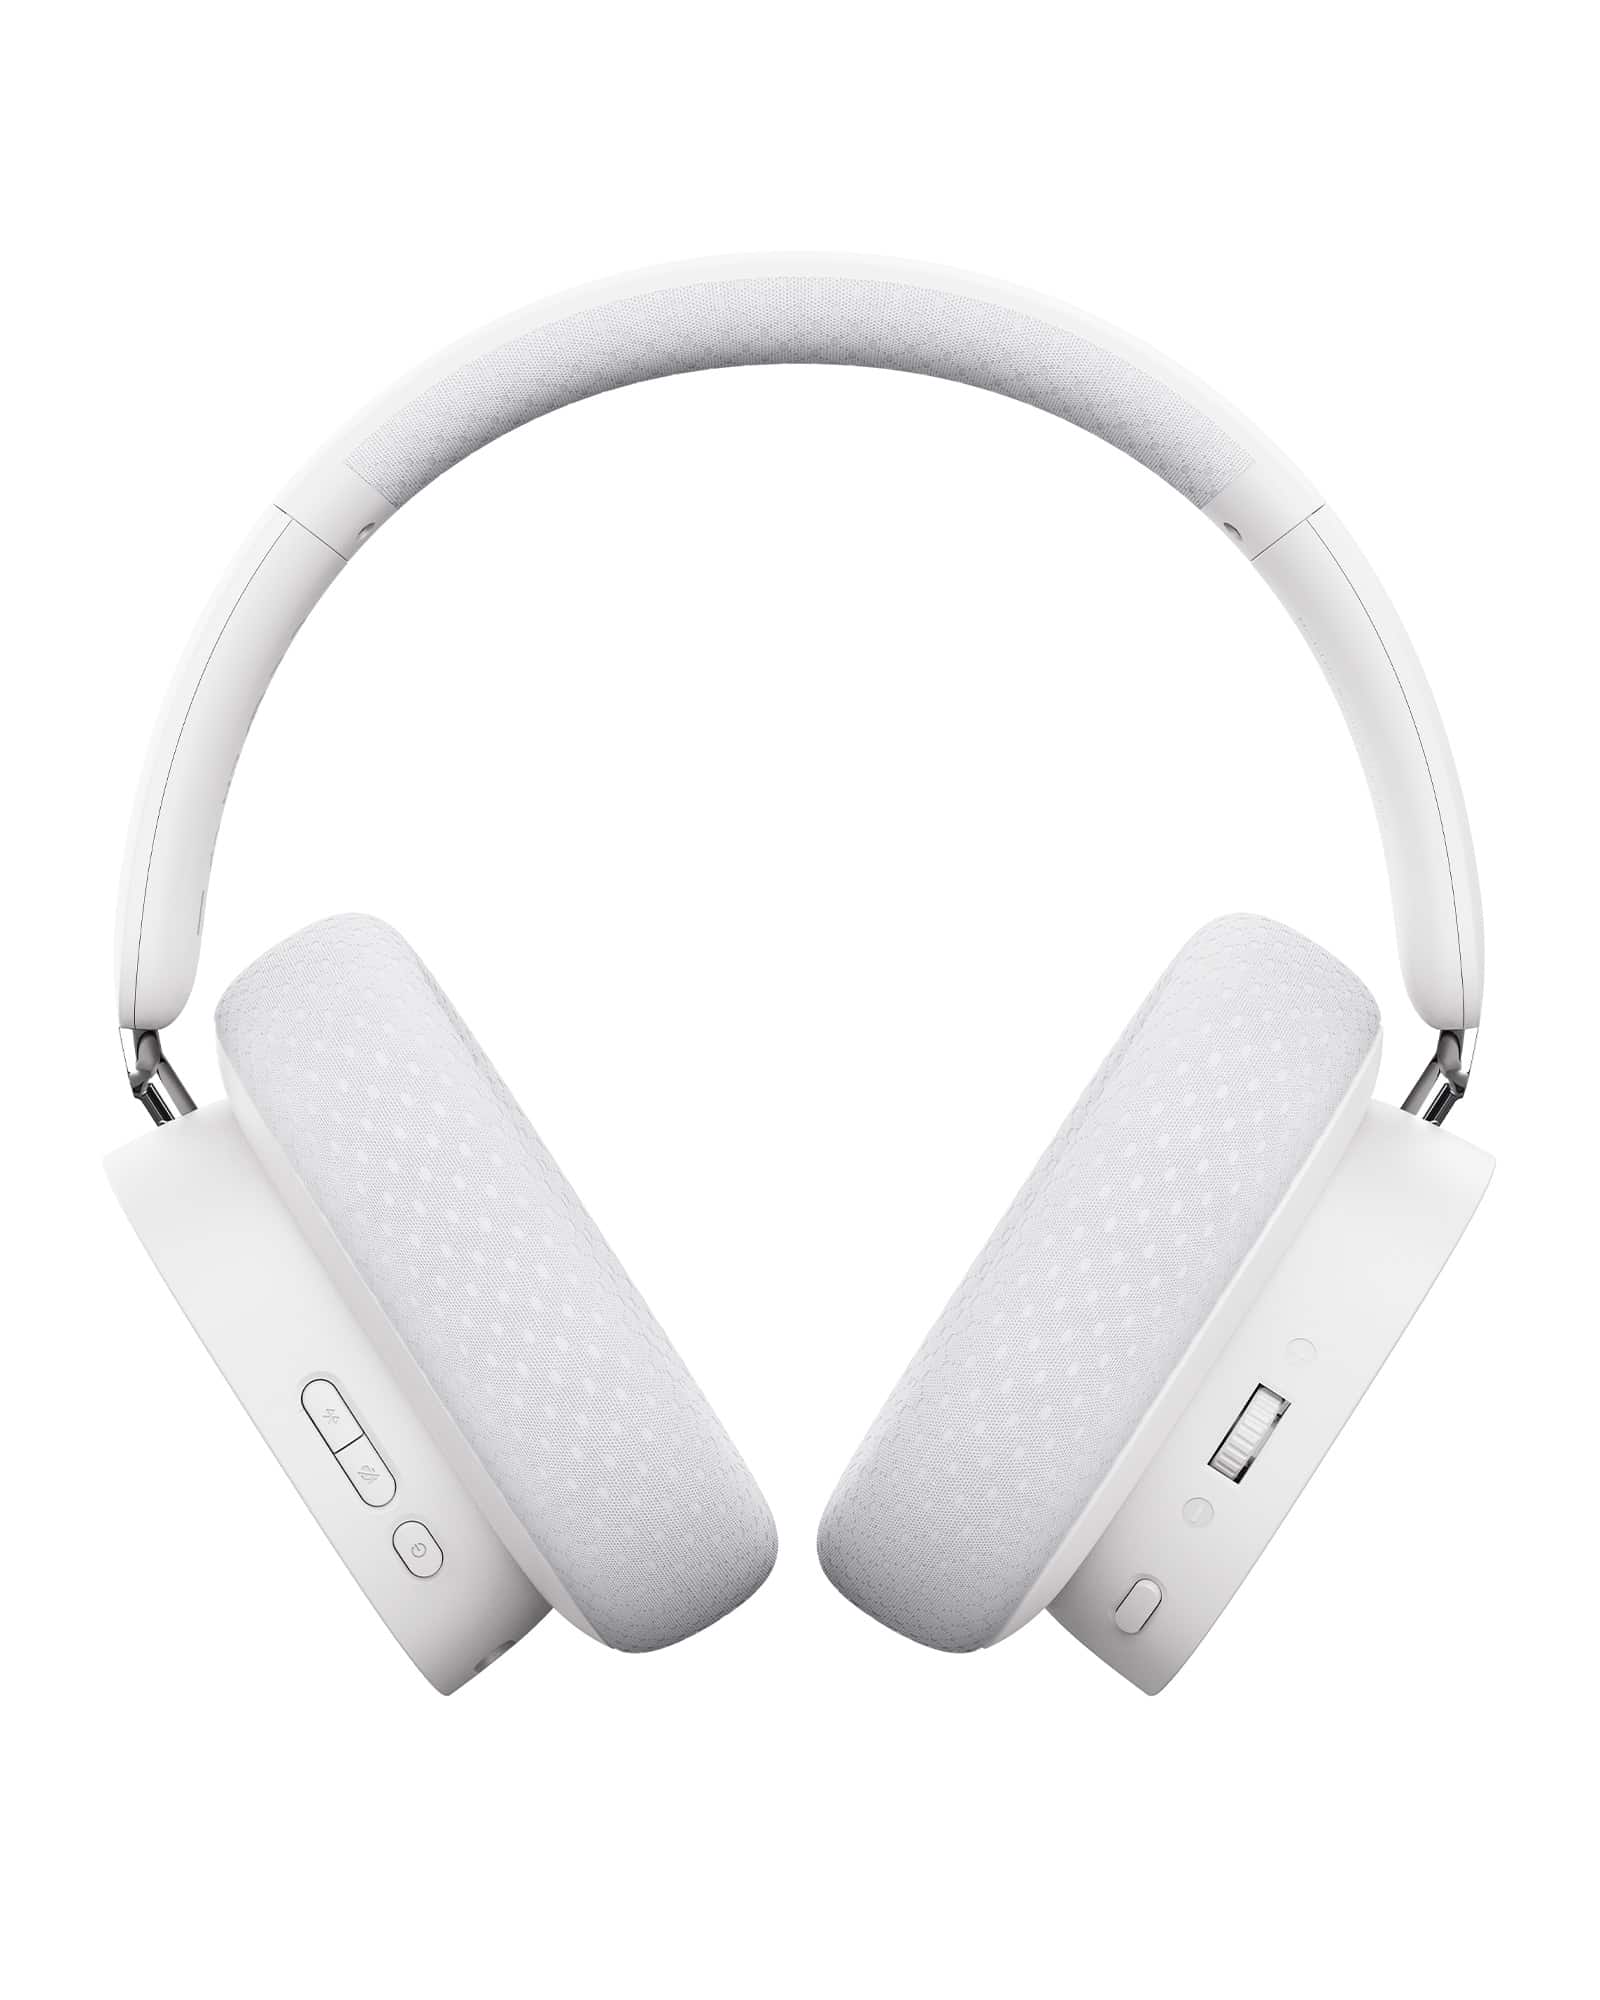 Baseus AeQur GH02 Gaming Wireless Headphones Moon White